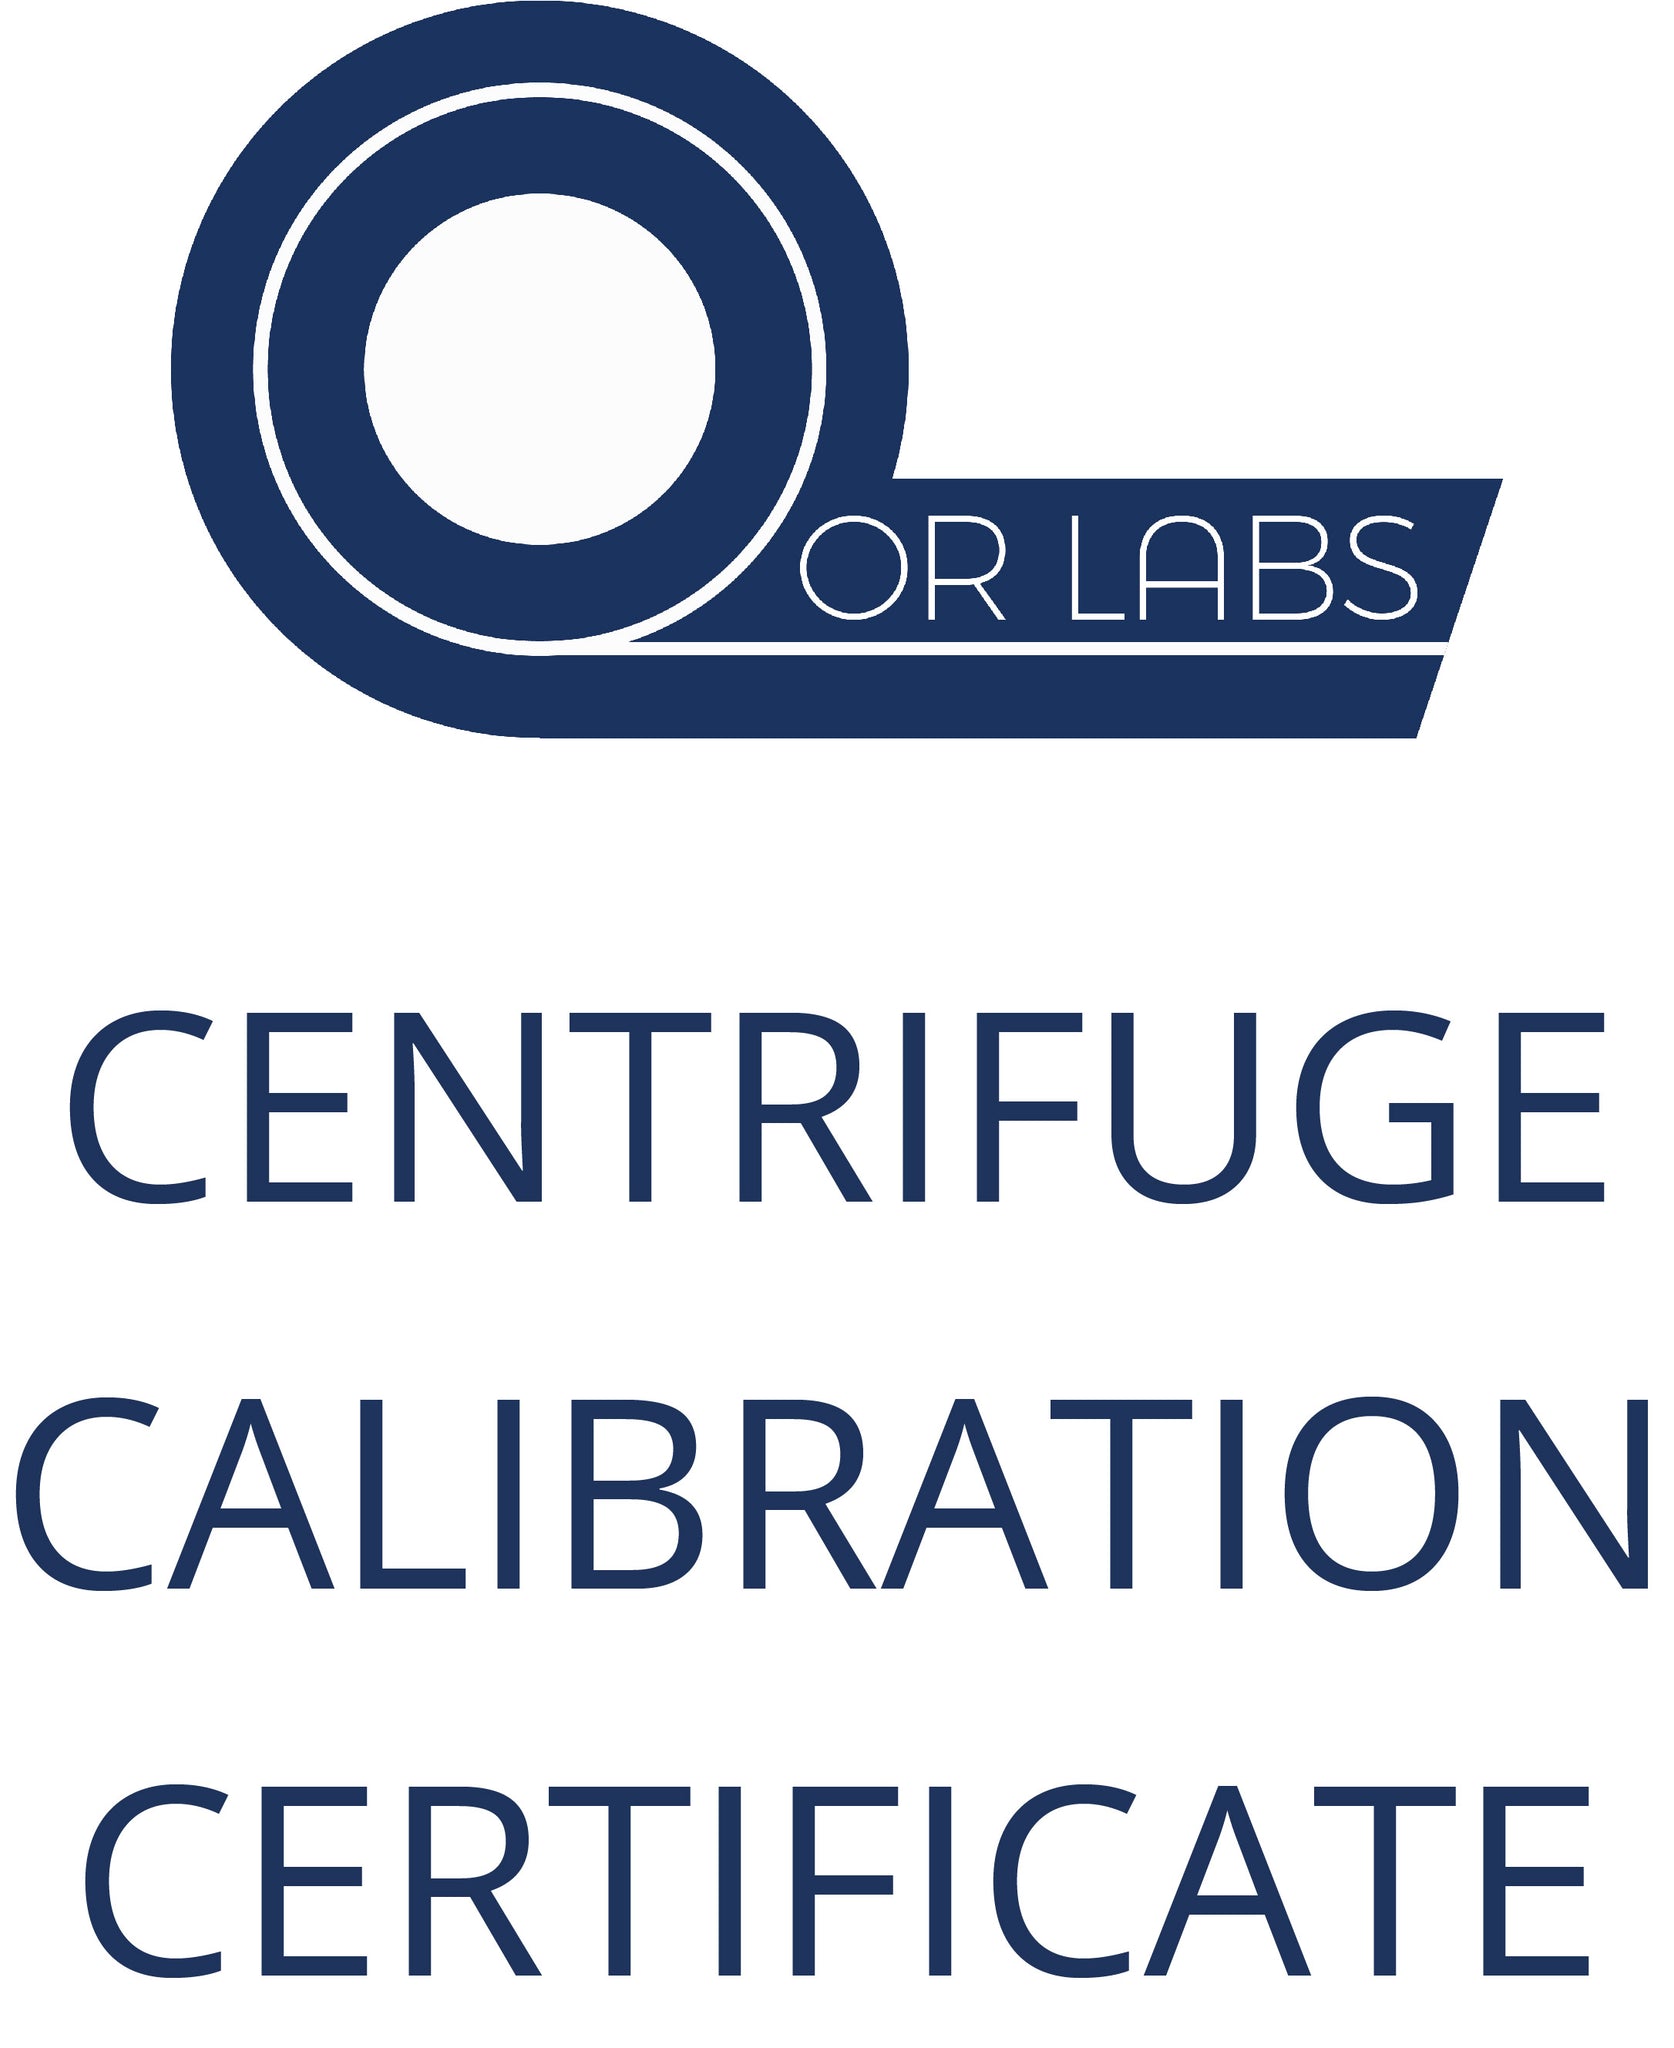 Centrifuge Calibration Certificate